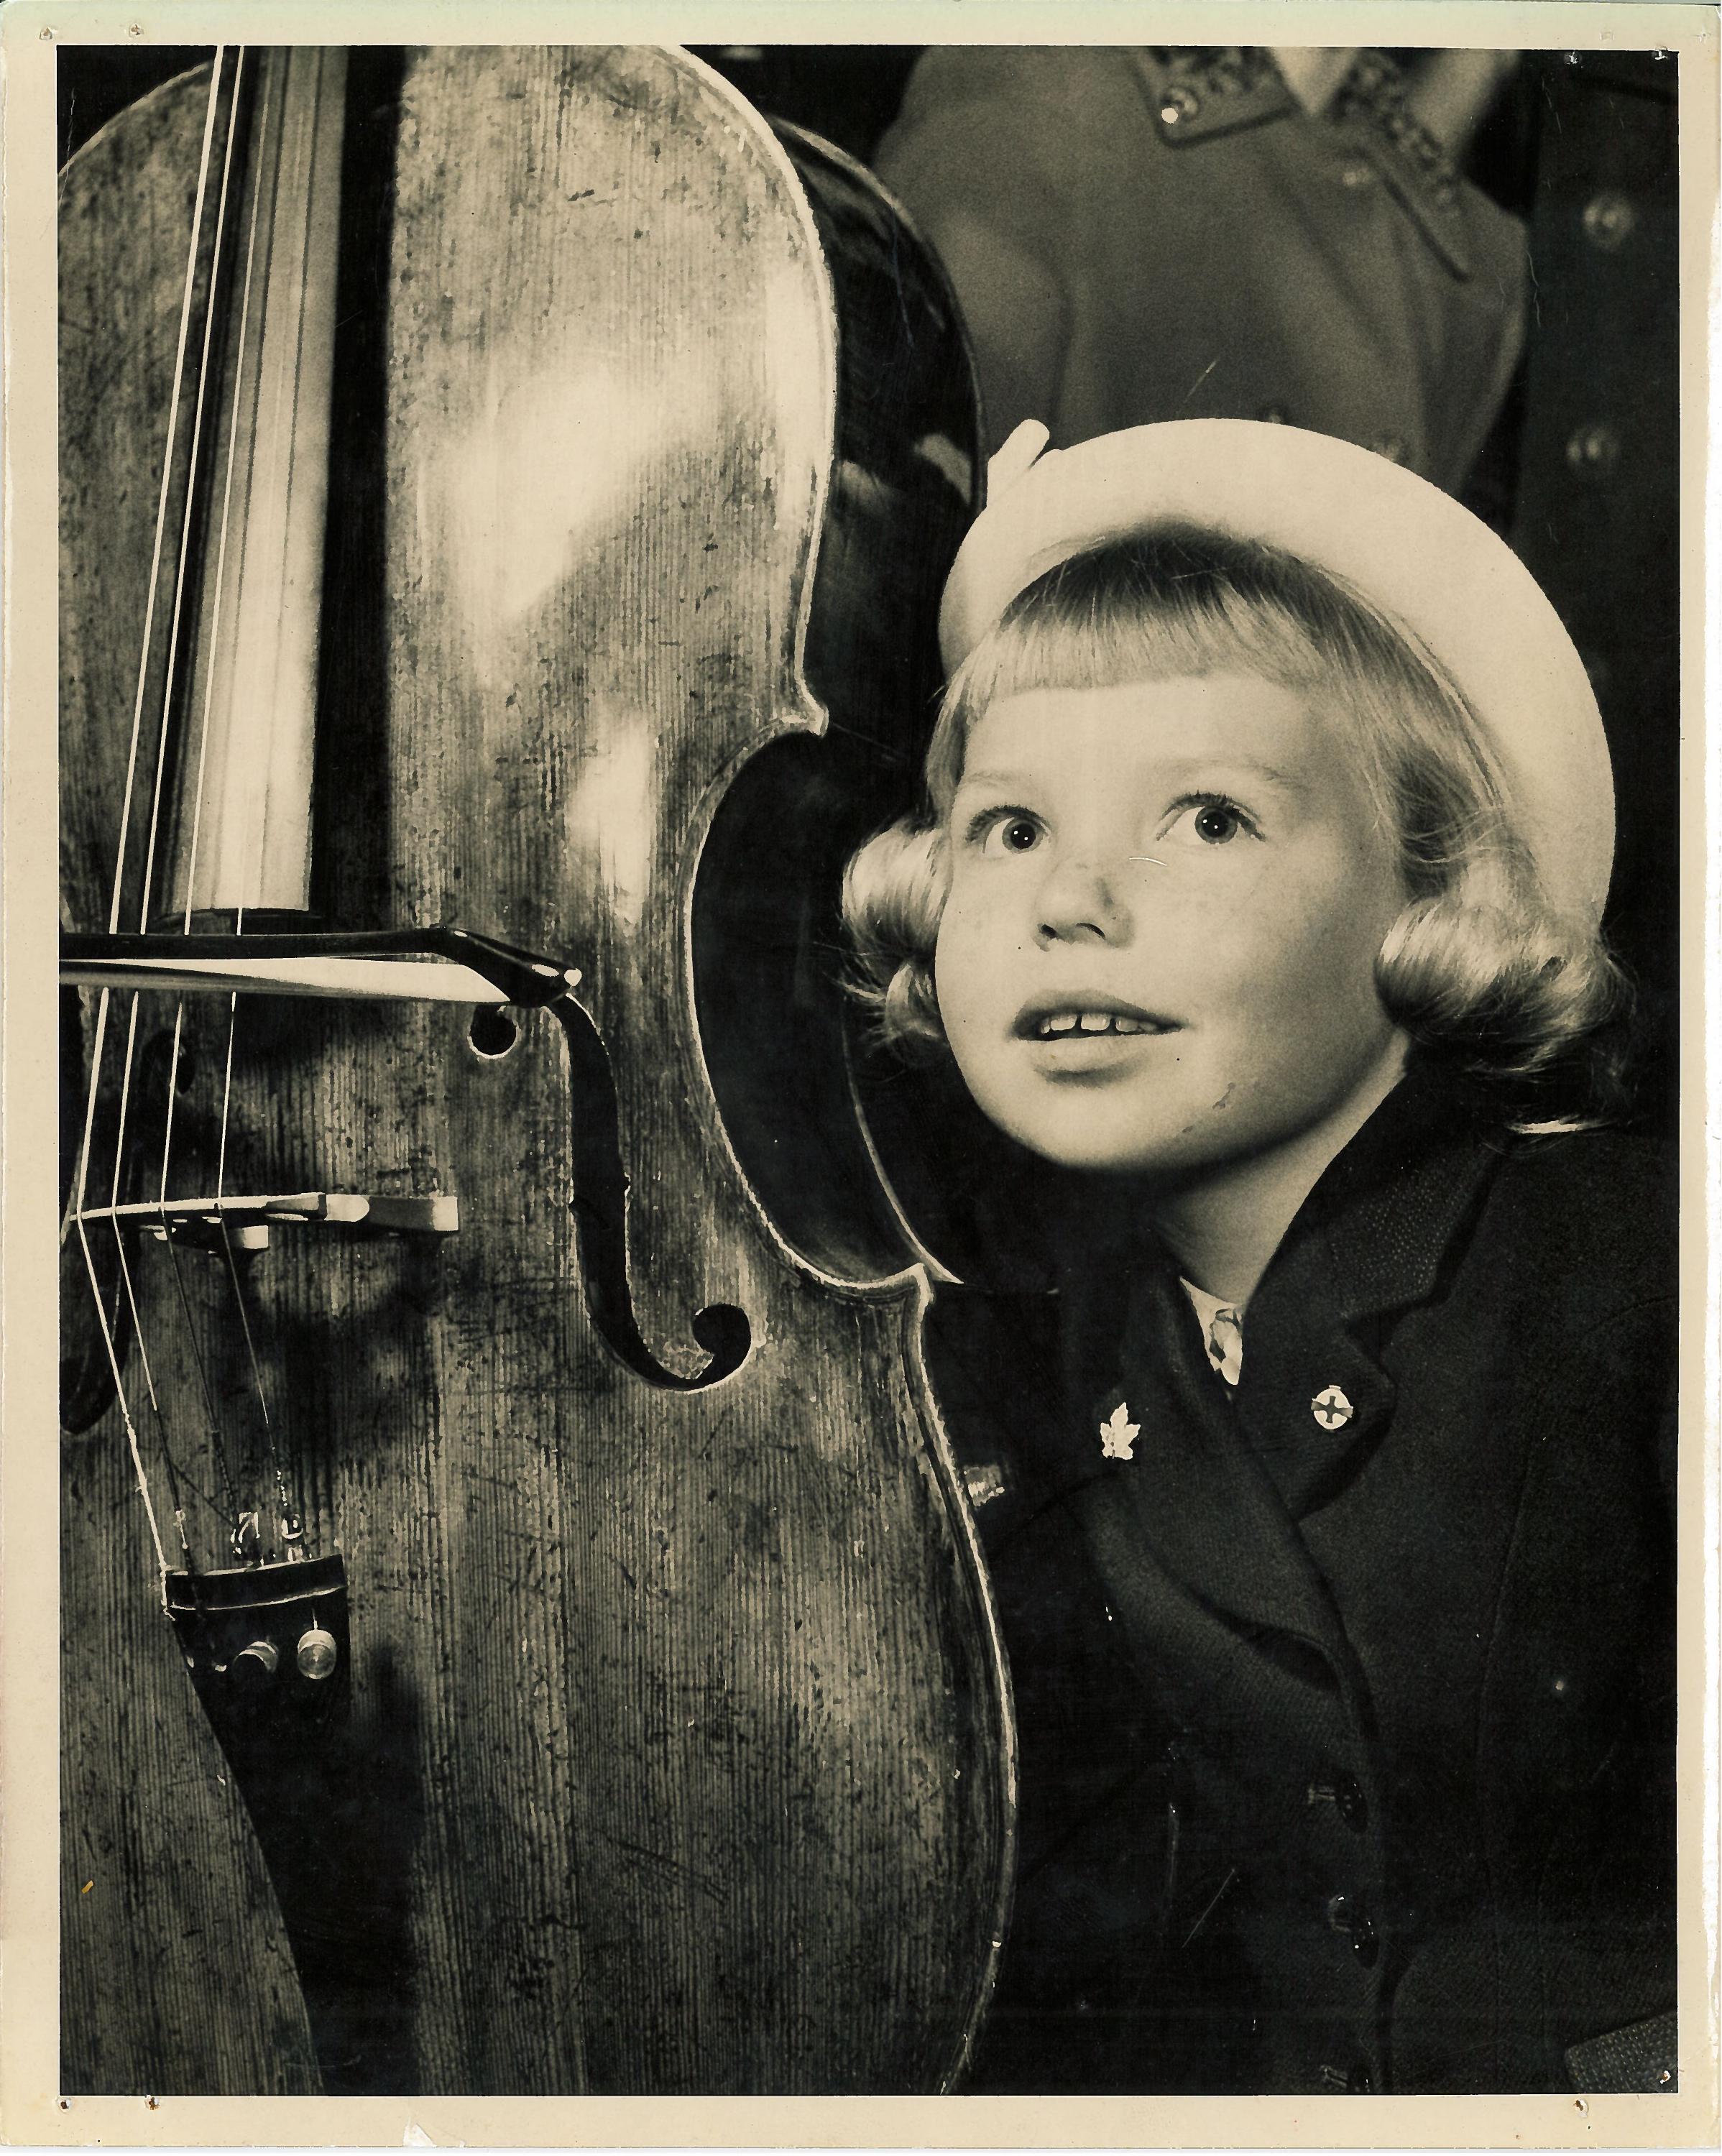 A young girl listens to a cello